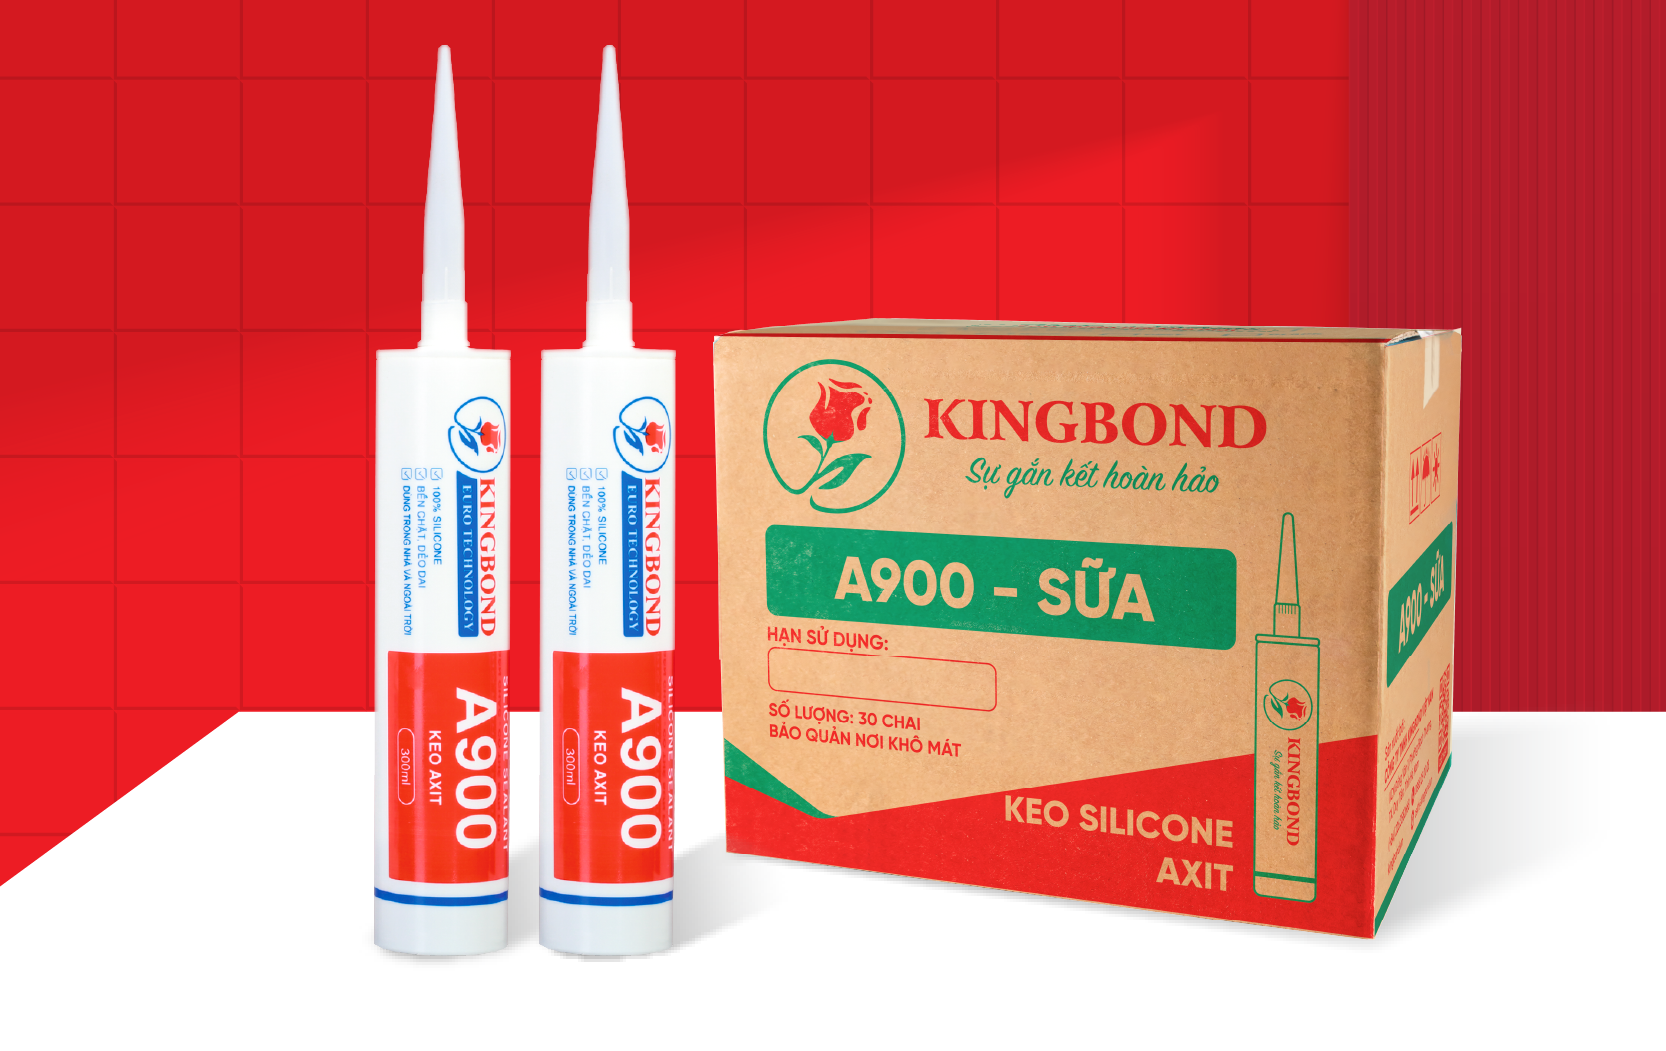 Keo silicone axit S900 sữa - Công Ty TNHH Kingbond Việt Nam